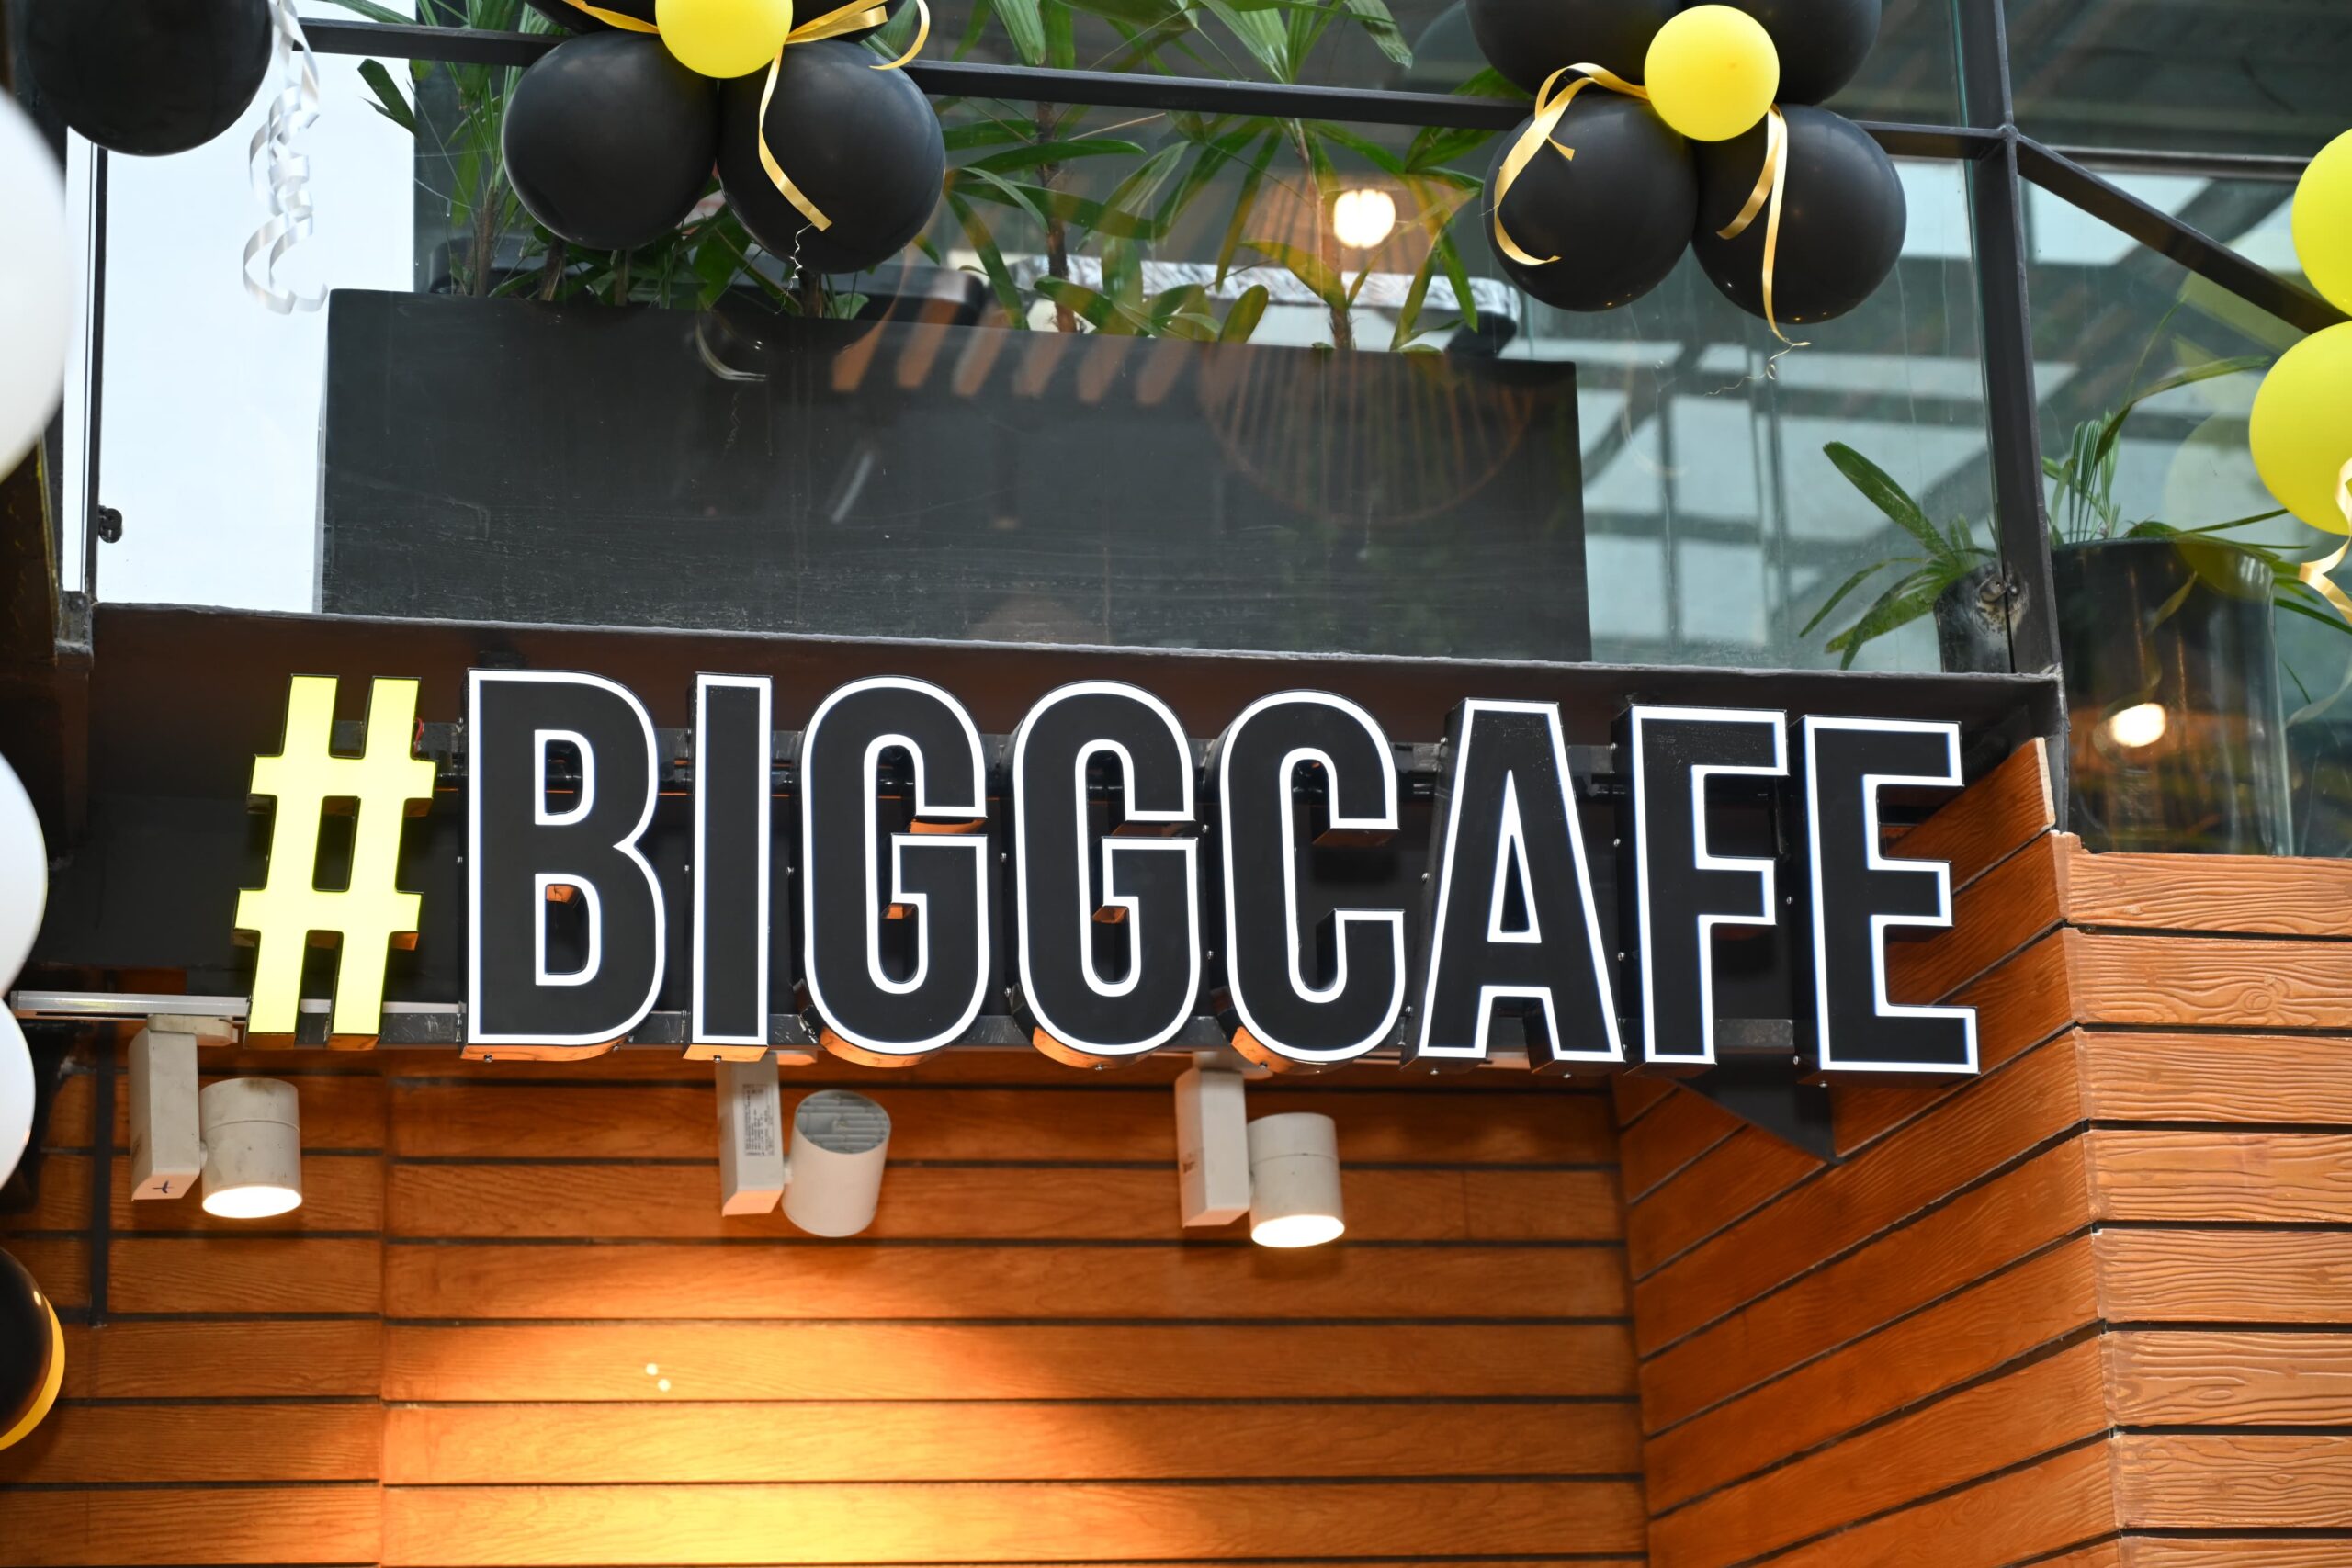 Biggies Burger eyes Mumbai expansion, expects 3X revenue in 2024